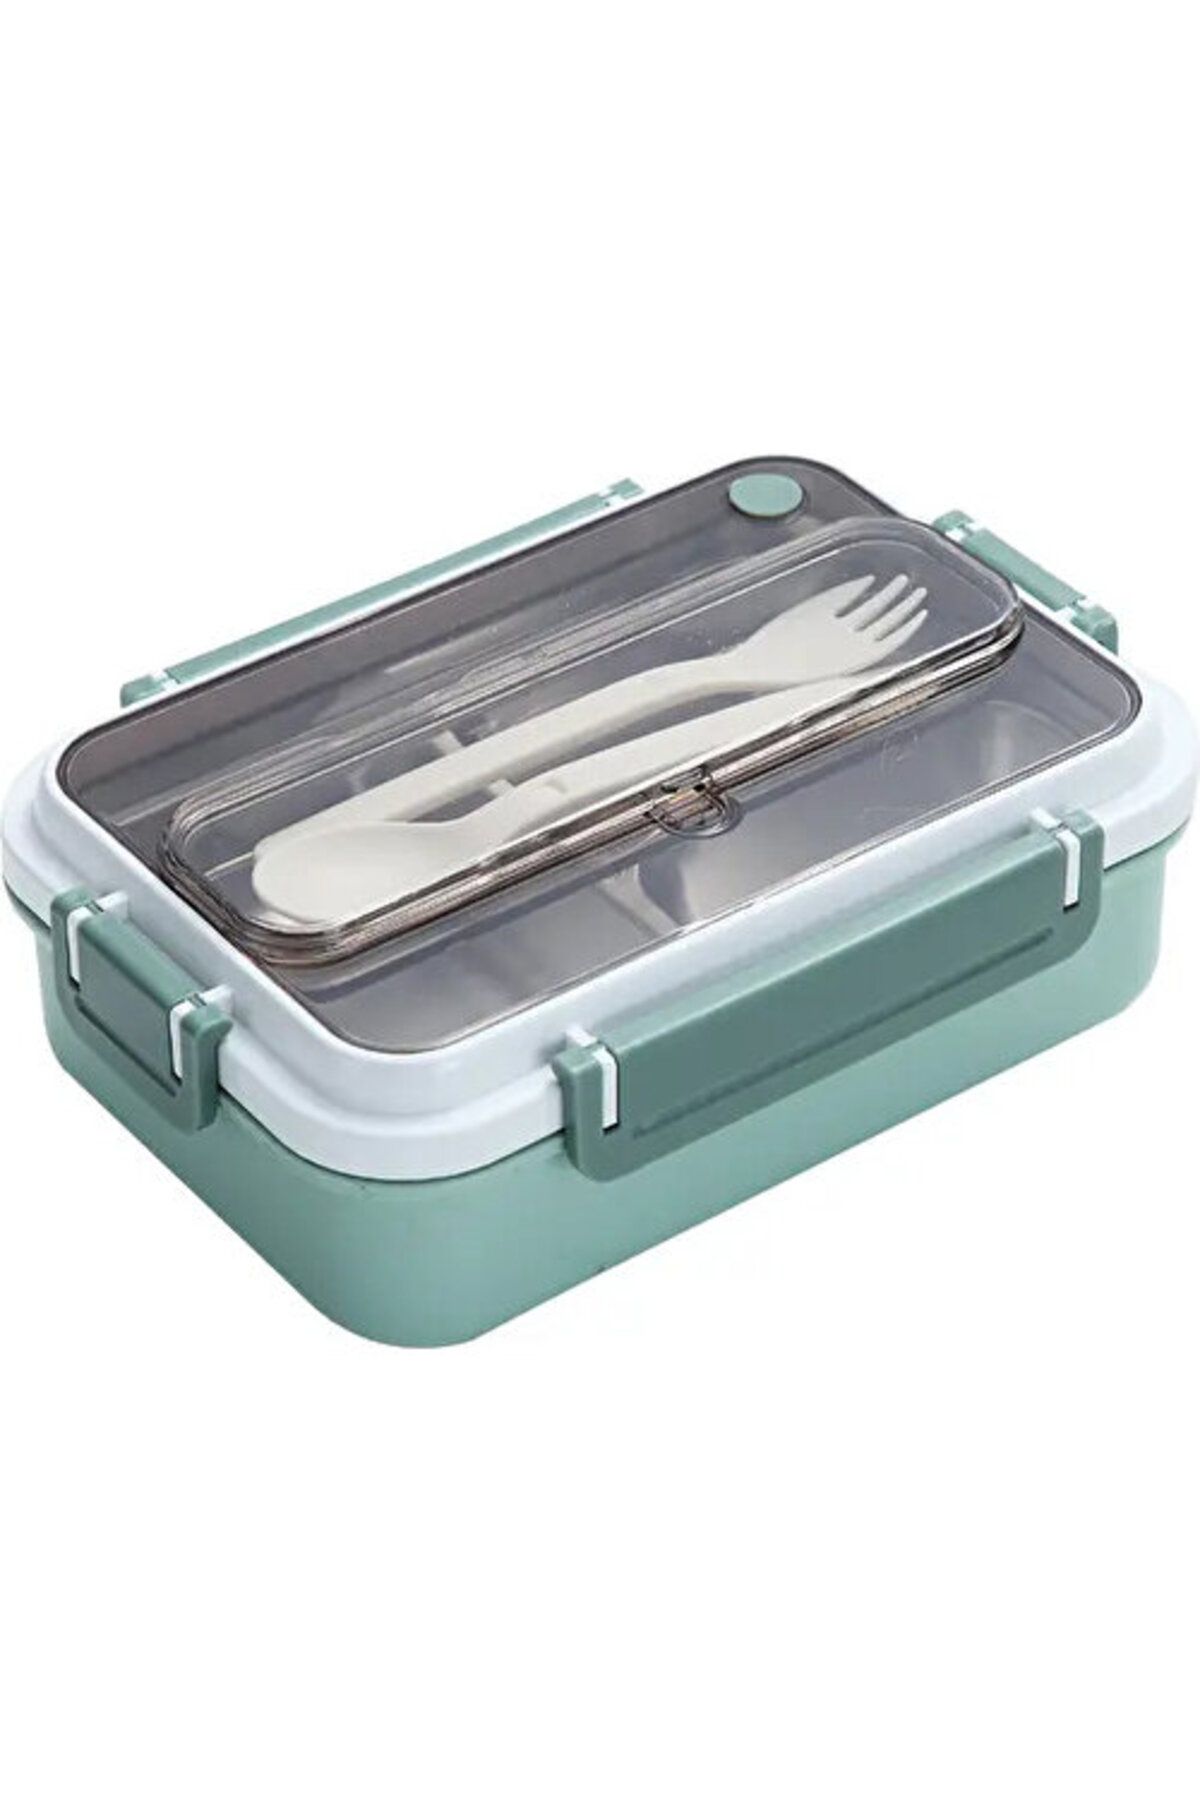 Vagonlife Karma Renk Çelik Lunch Box Yemek Kutusu (Beslenme Kutusu) 1000 Ml Xc-528